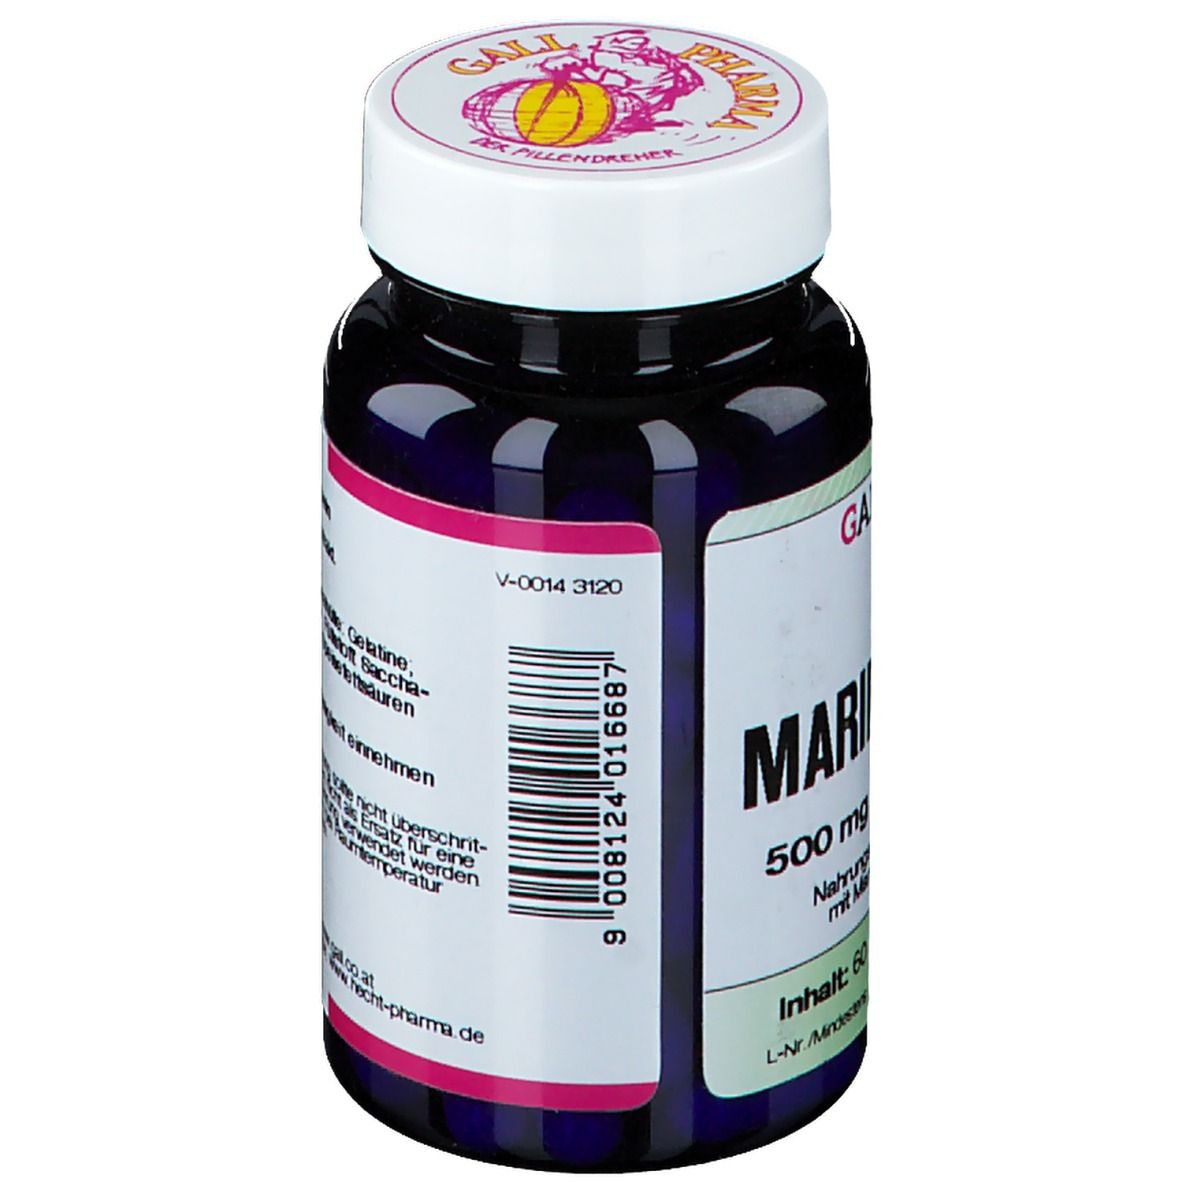 GALL PHARMA Mariendistel 500 mg GPH